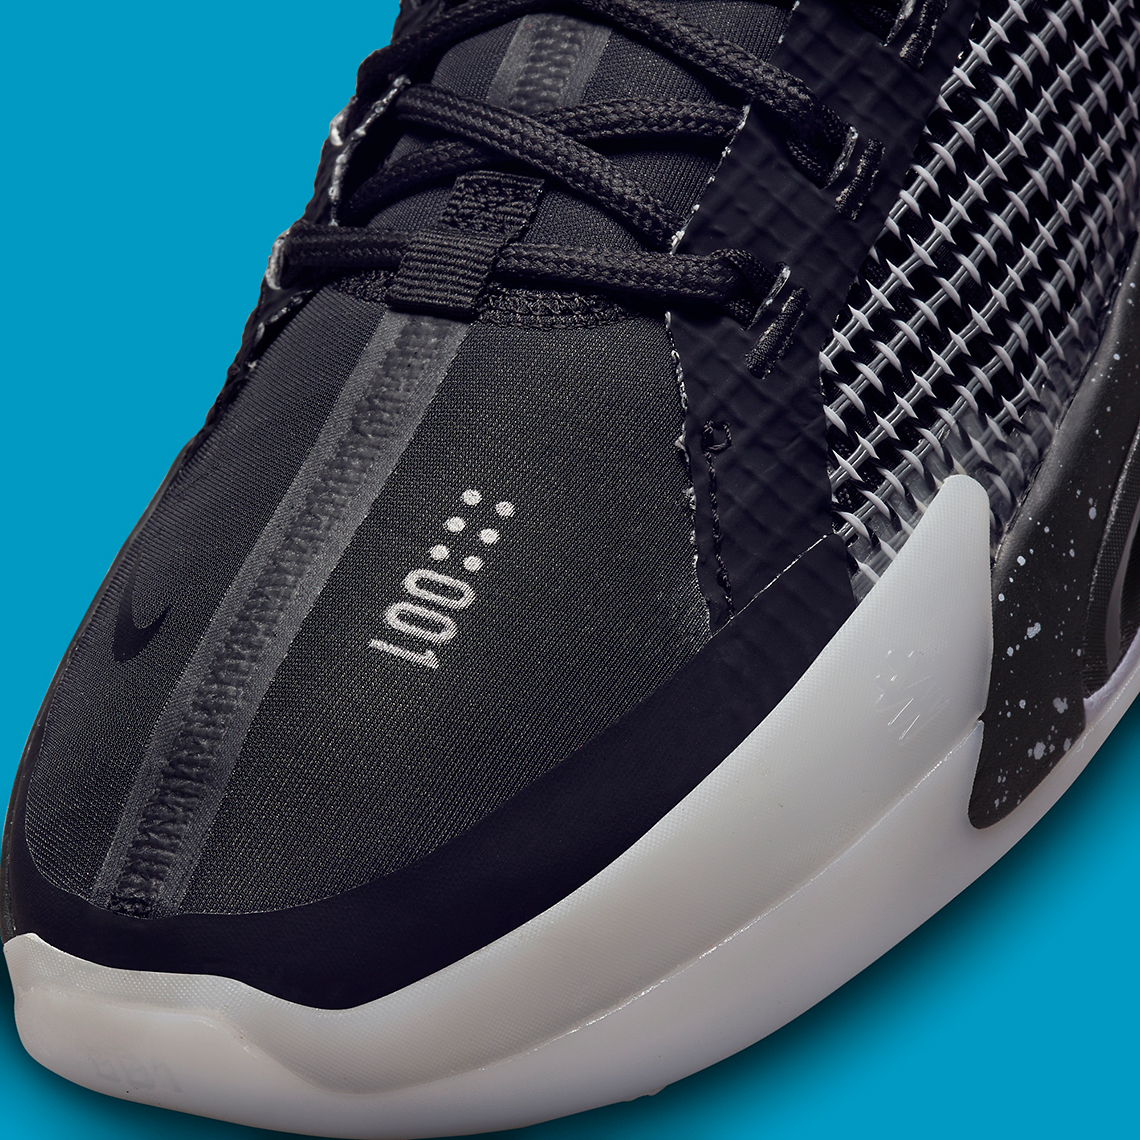 Nike Zoom Gt Jump Black Cz9907 001 Release Date 6